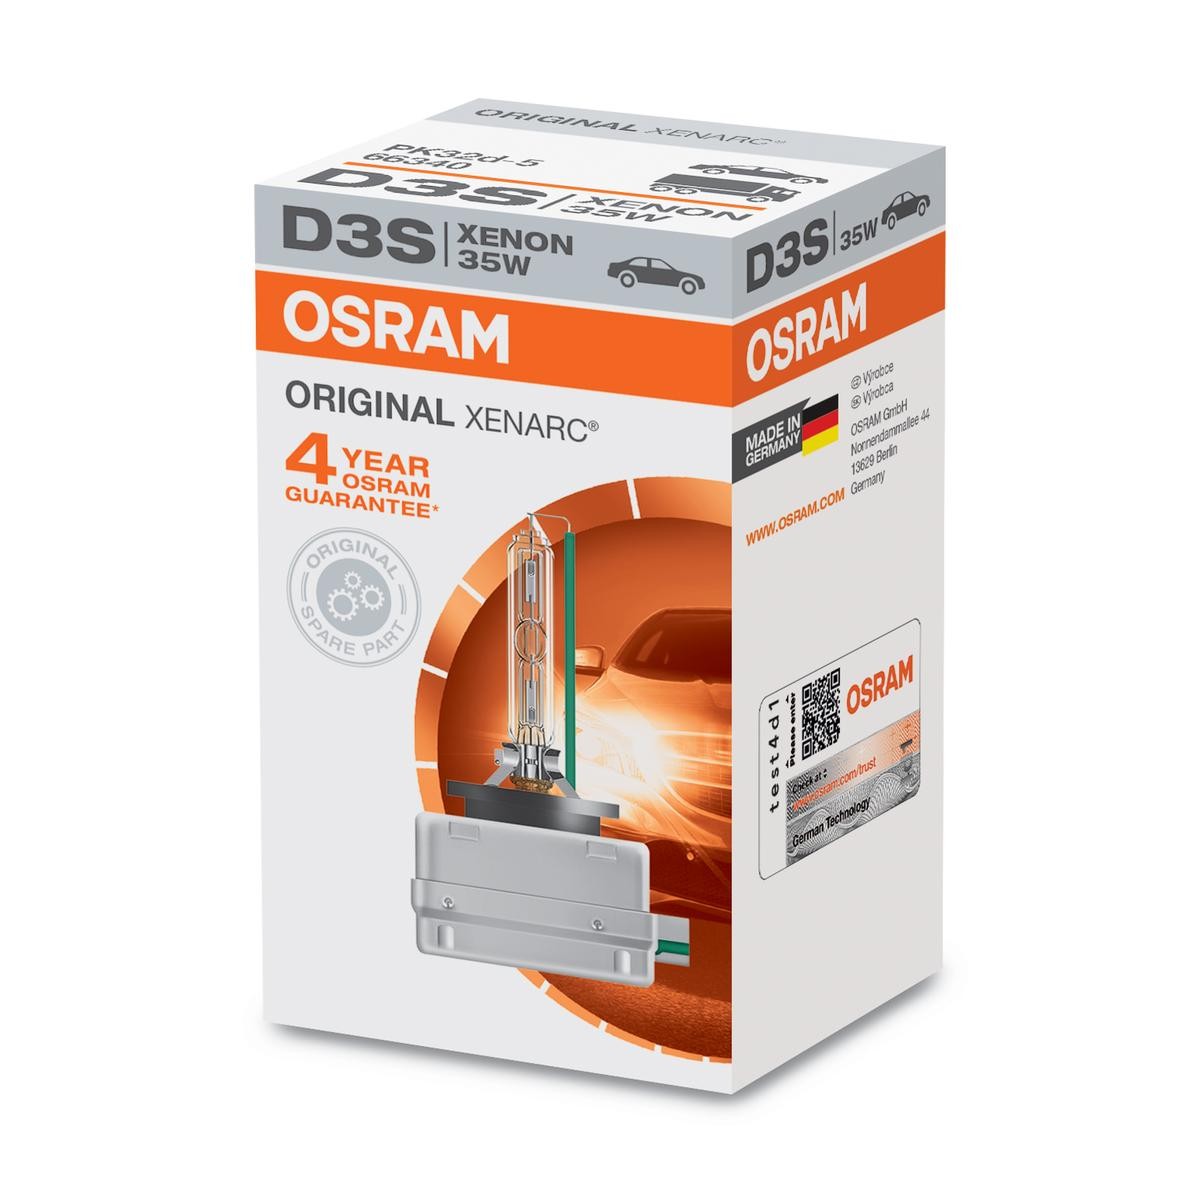 D3S OSRAM XENARC ORIGINAL D3S 42V 35W 4100K Xenon Lampa 66340 köp lågt pris